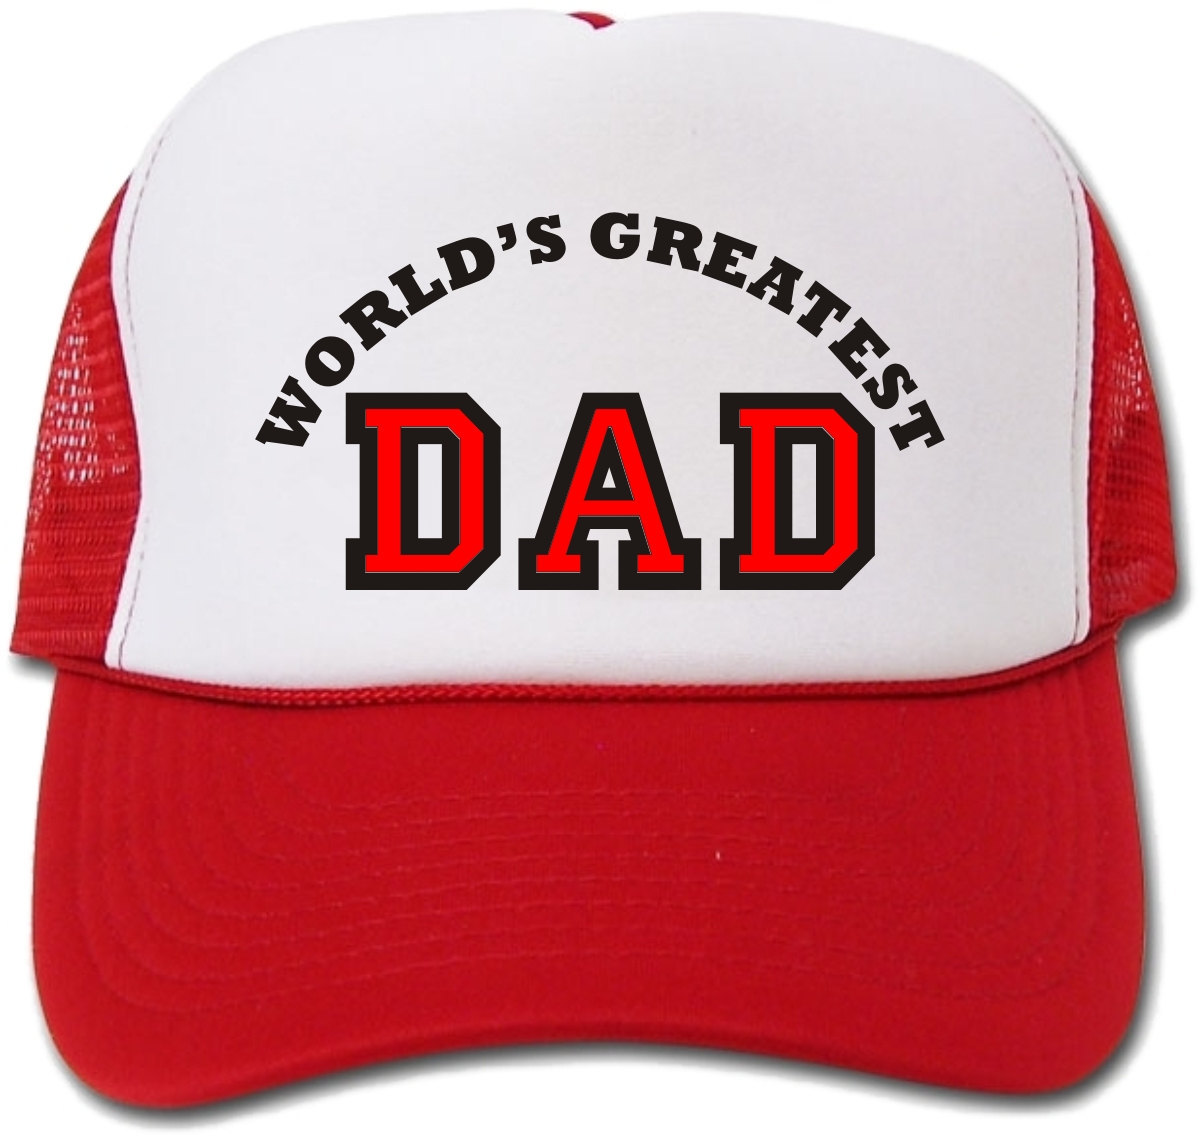 World's Greatest Dad Hat/Cap